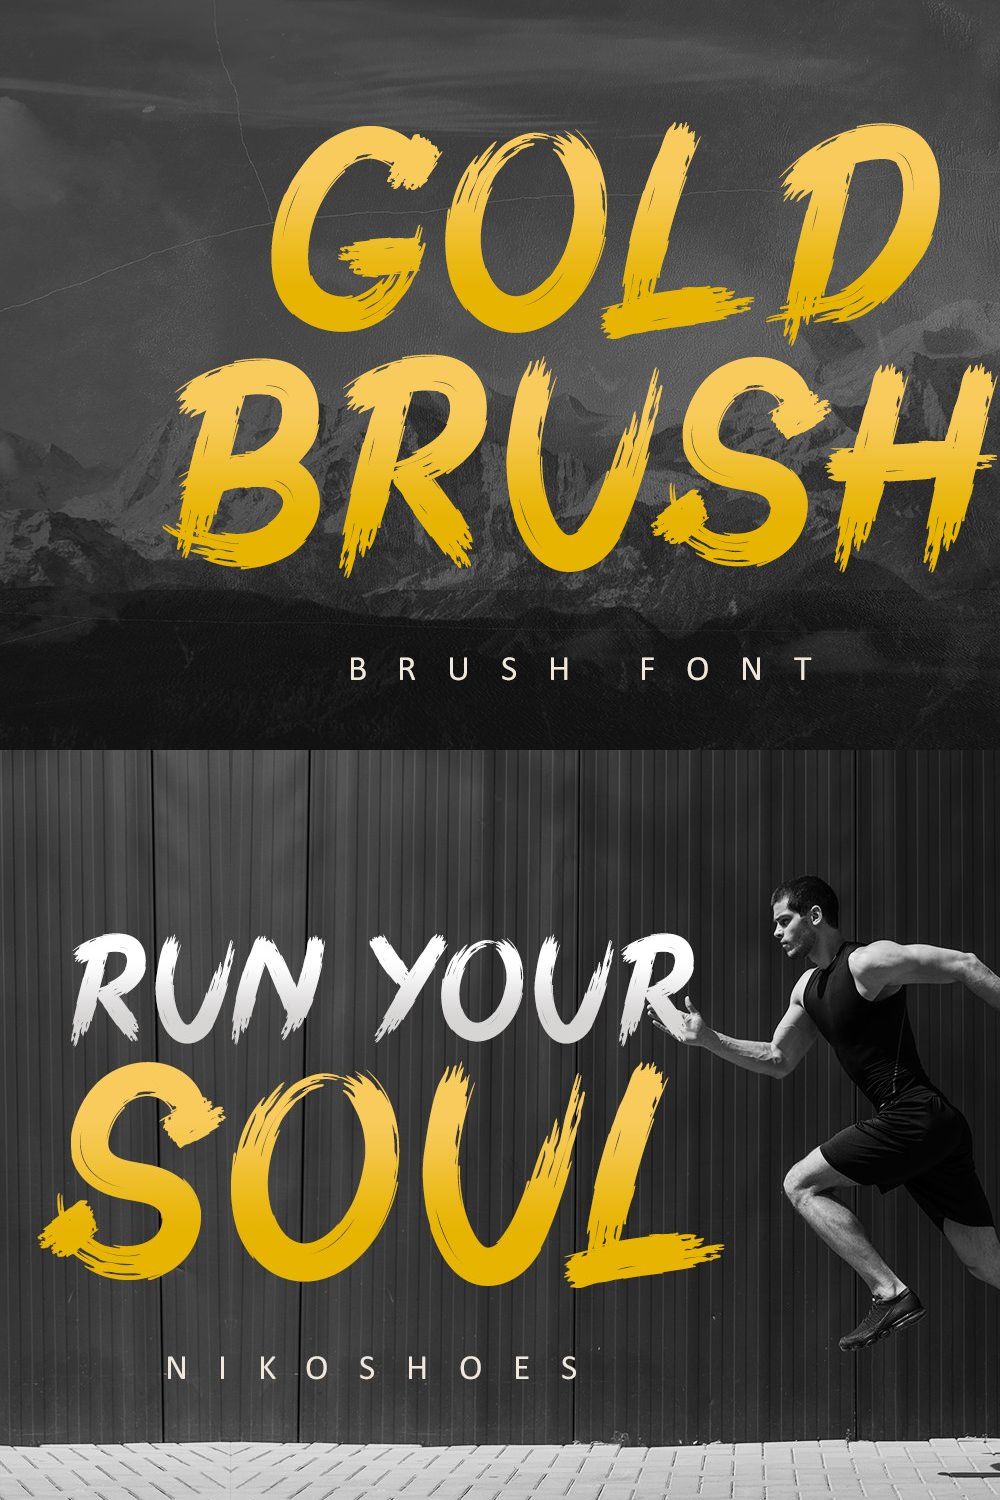 Gold Brush Font pinterest preview image.